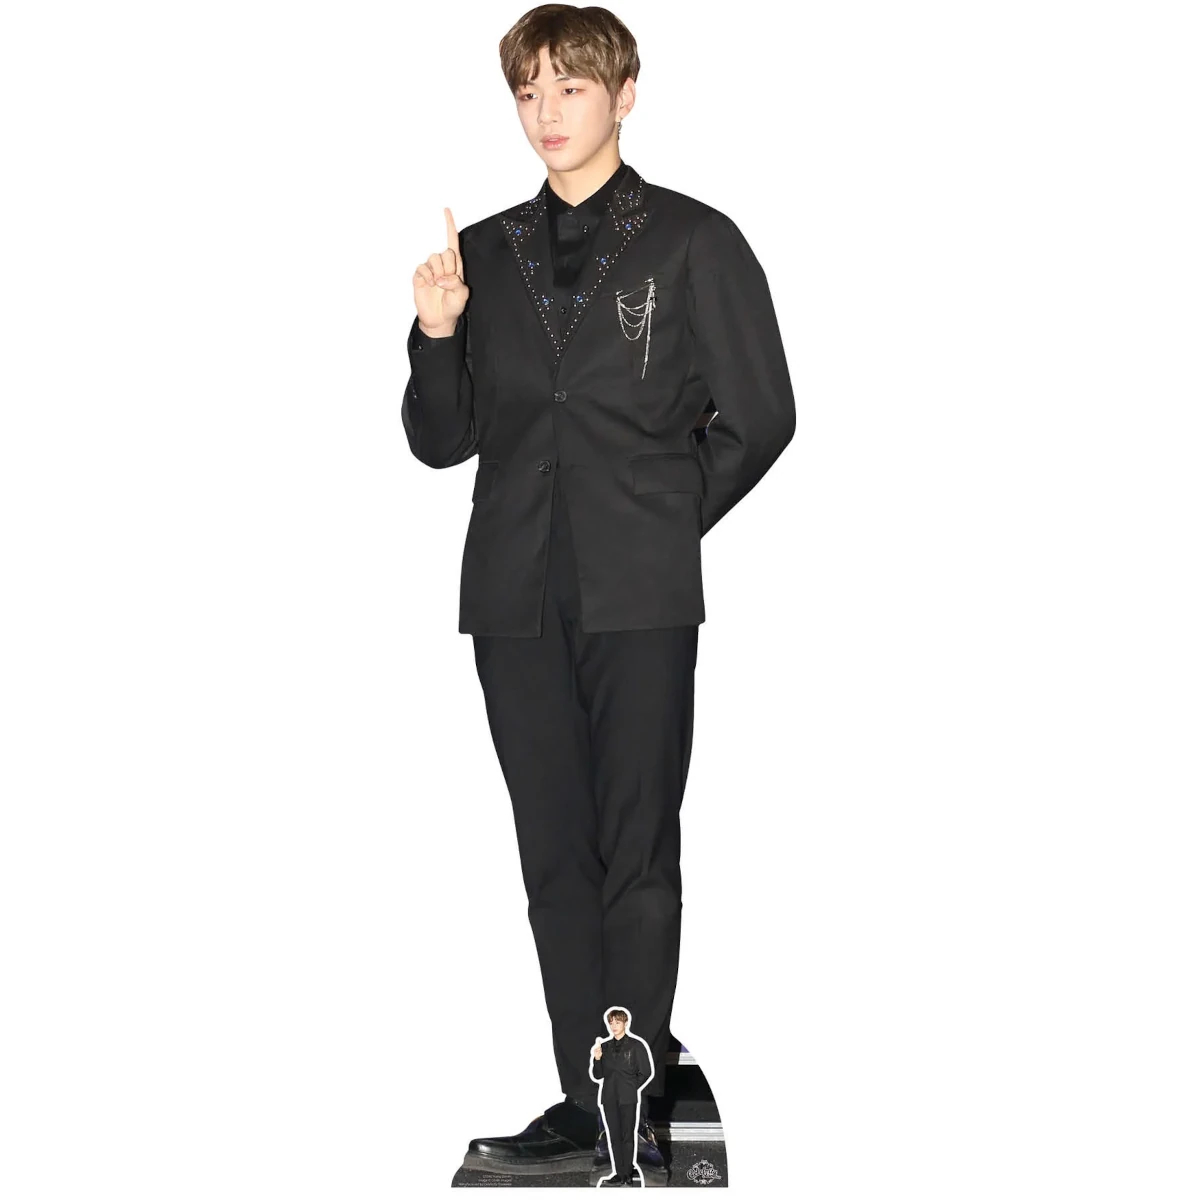 CS842 Kang Daniel 'Black Suit' (South Korean Singer) Lifesize + Mini Cardboard Cutout Standee Front